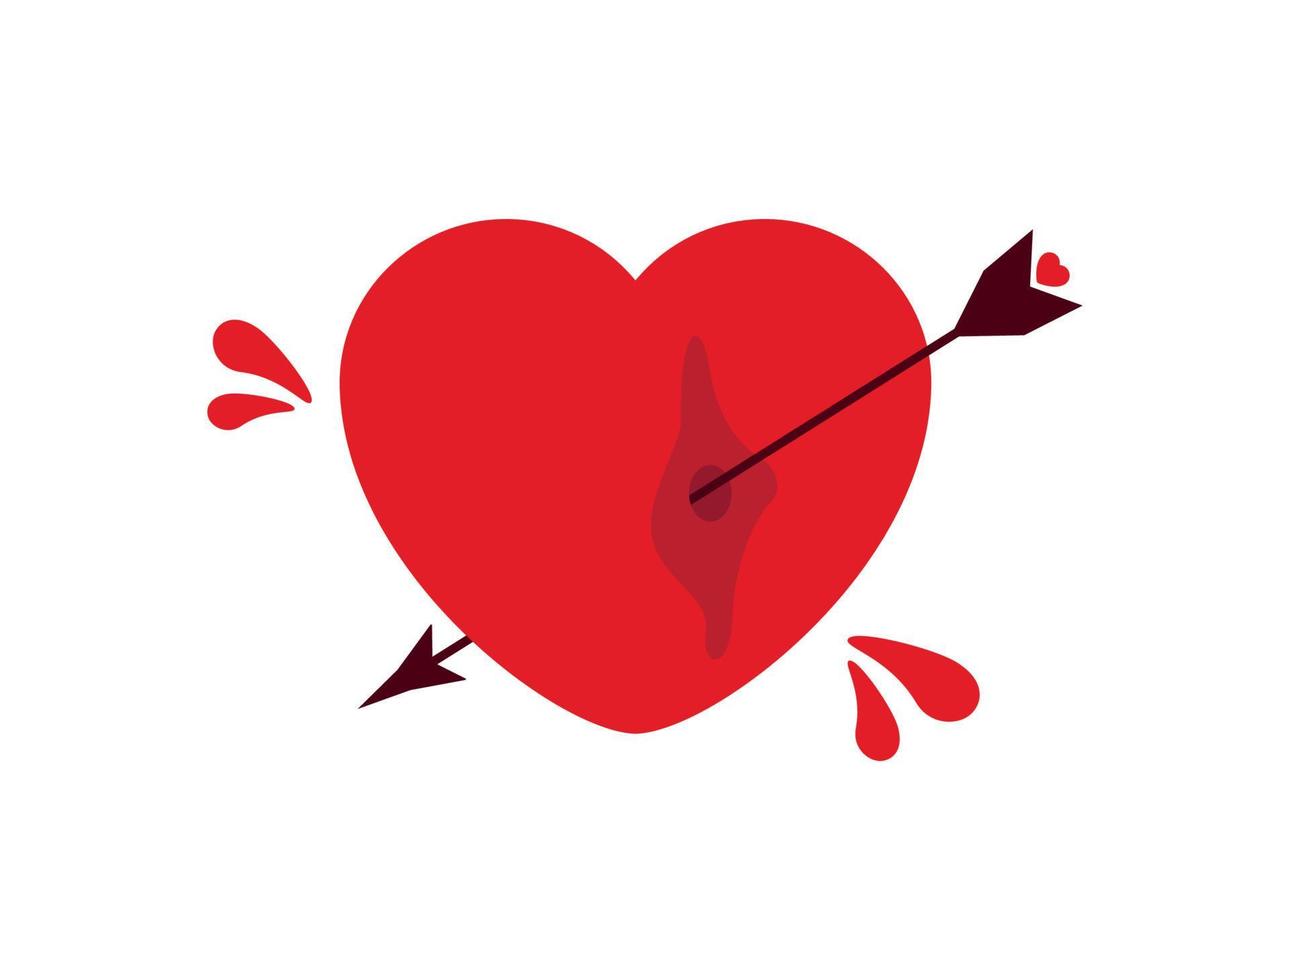 Vector illustration of Red Heart